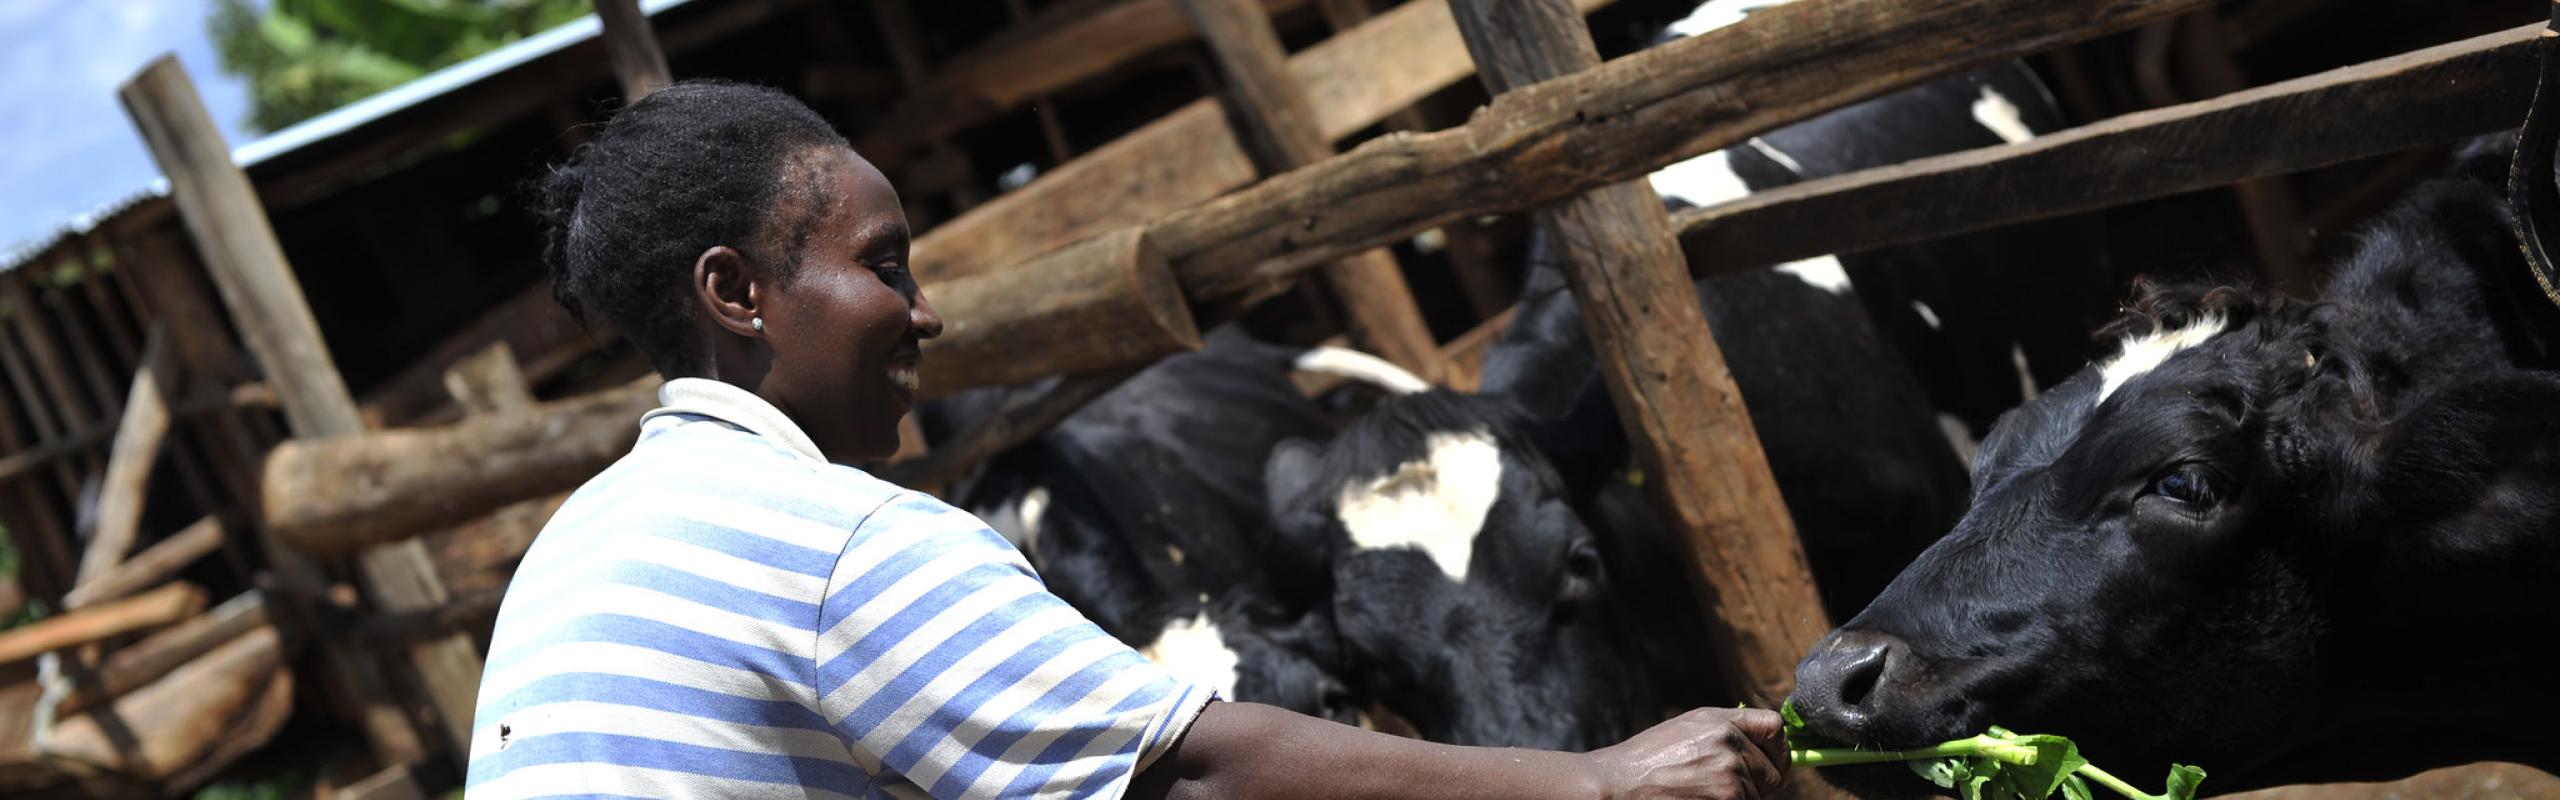 Female farmer in Kenya feeds dairy cows through wooden fence